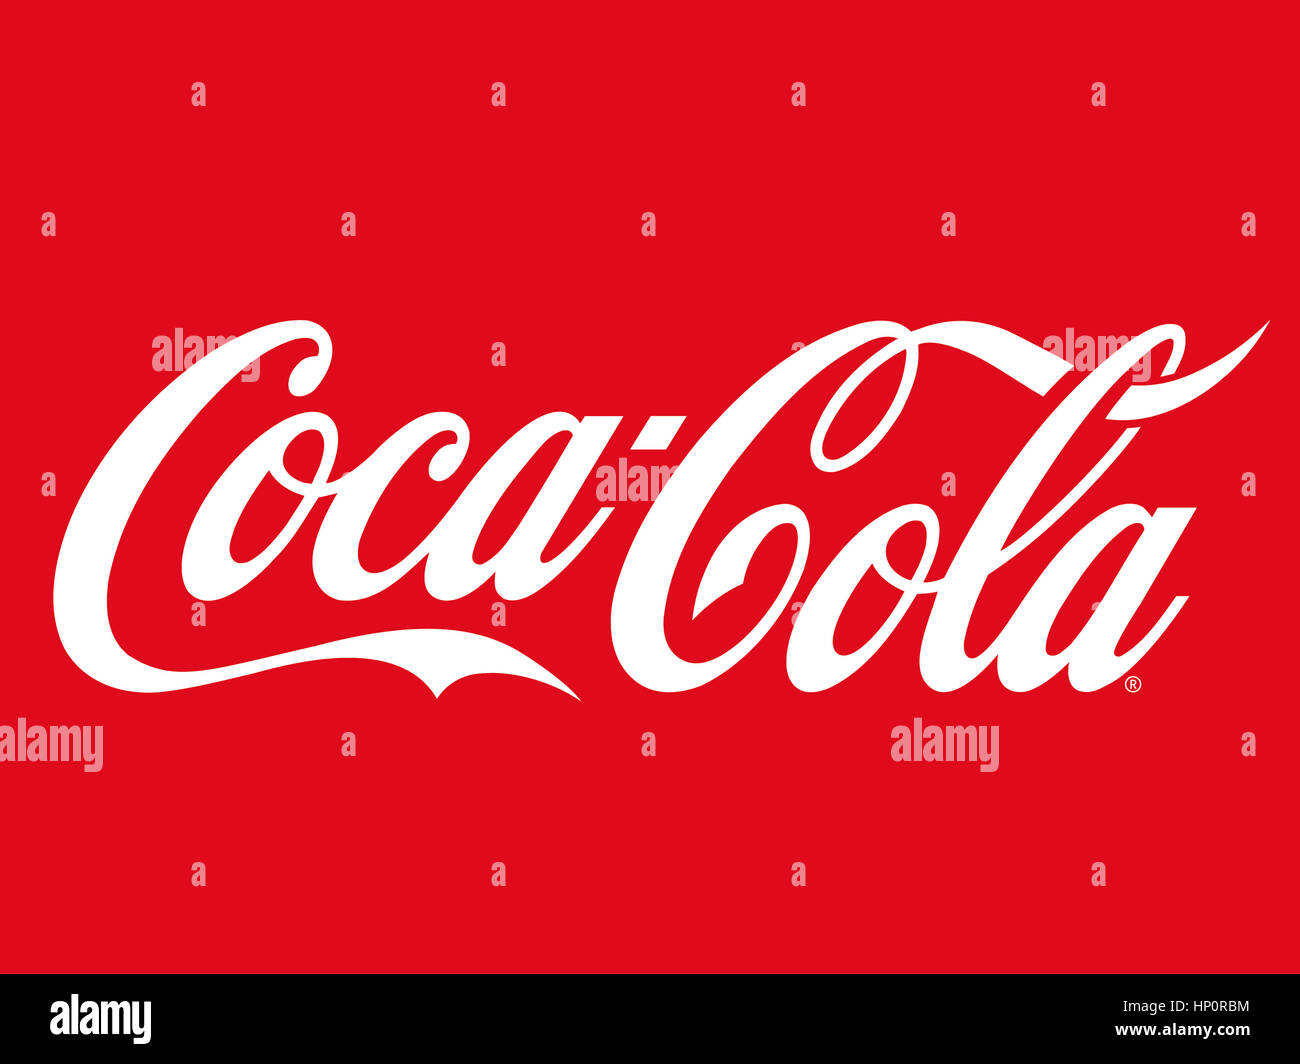 Coca Cola logo on red background Stock Photo